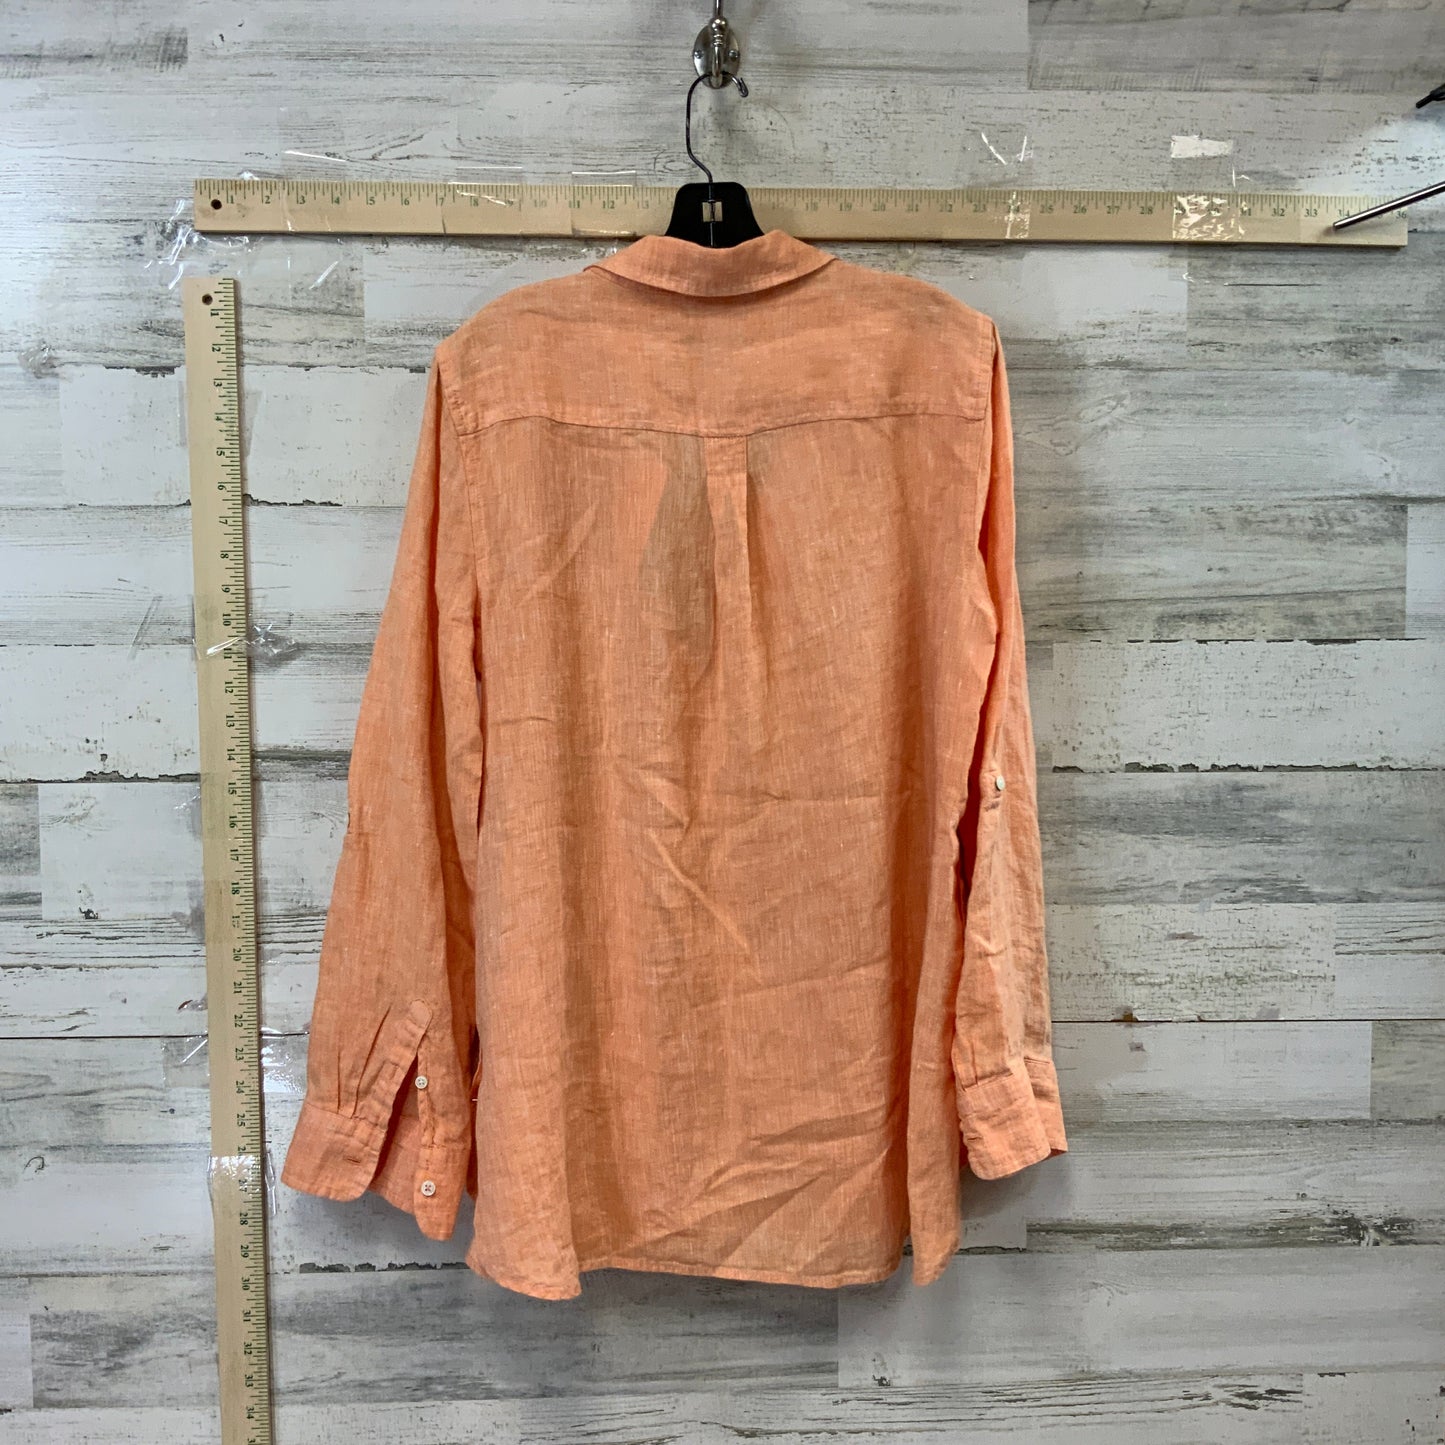 Orange Blouse Long Sleeve Talbots, Size L